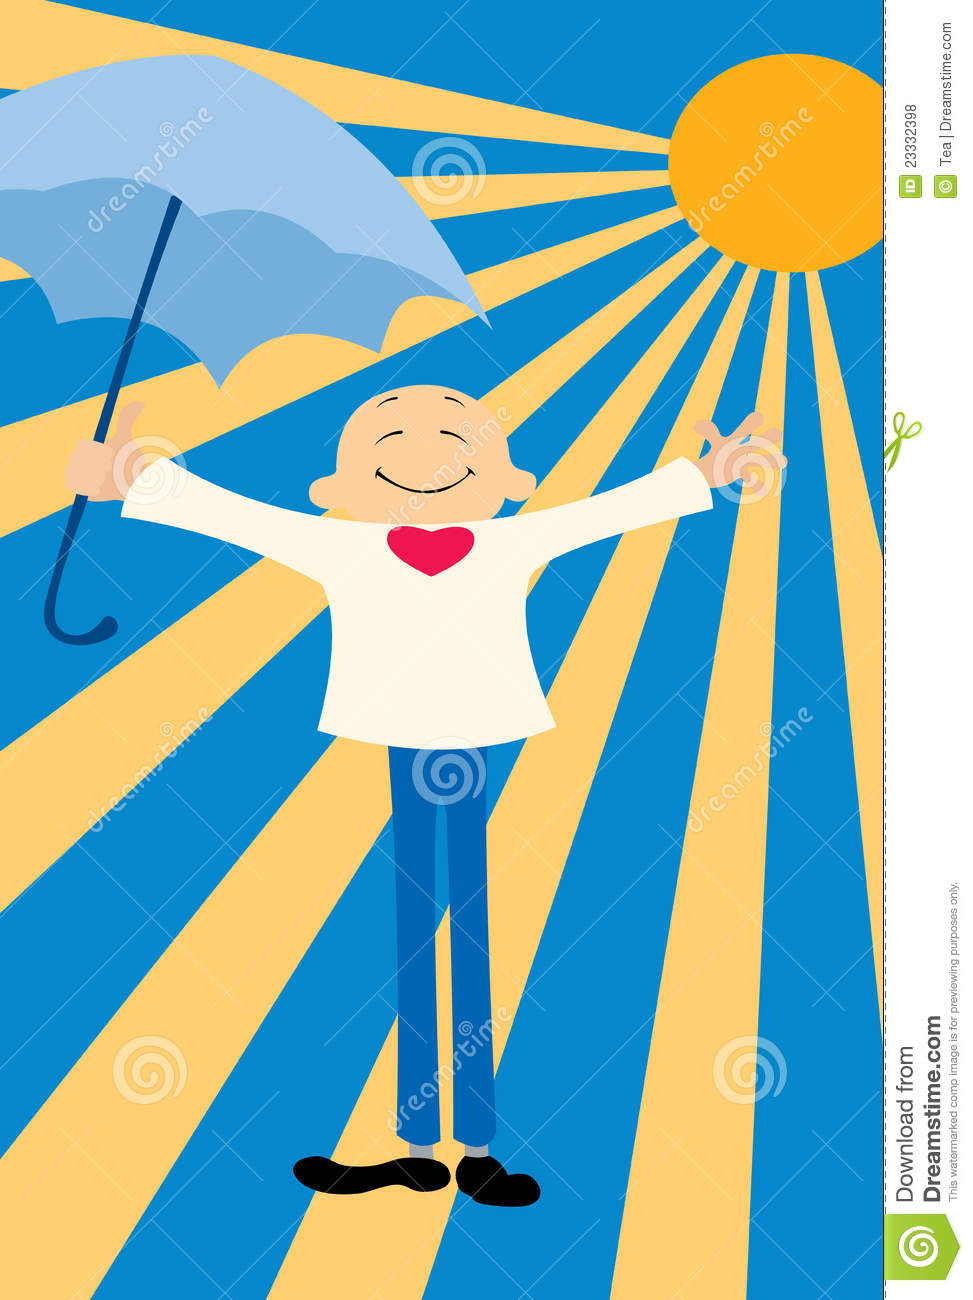 Vector Image Of Happy Optimist With Umbrella After Rain 